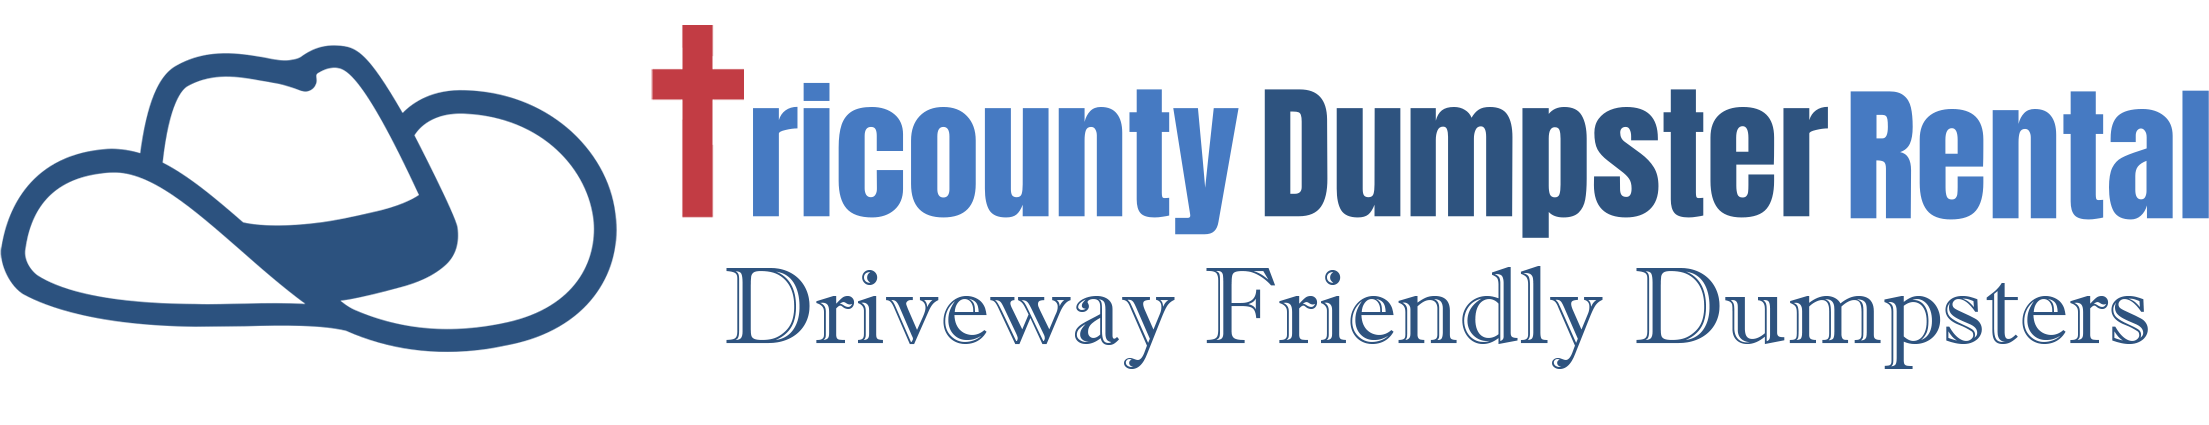 Tri County Dumpster Rental